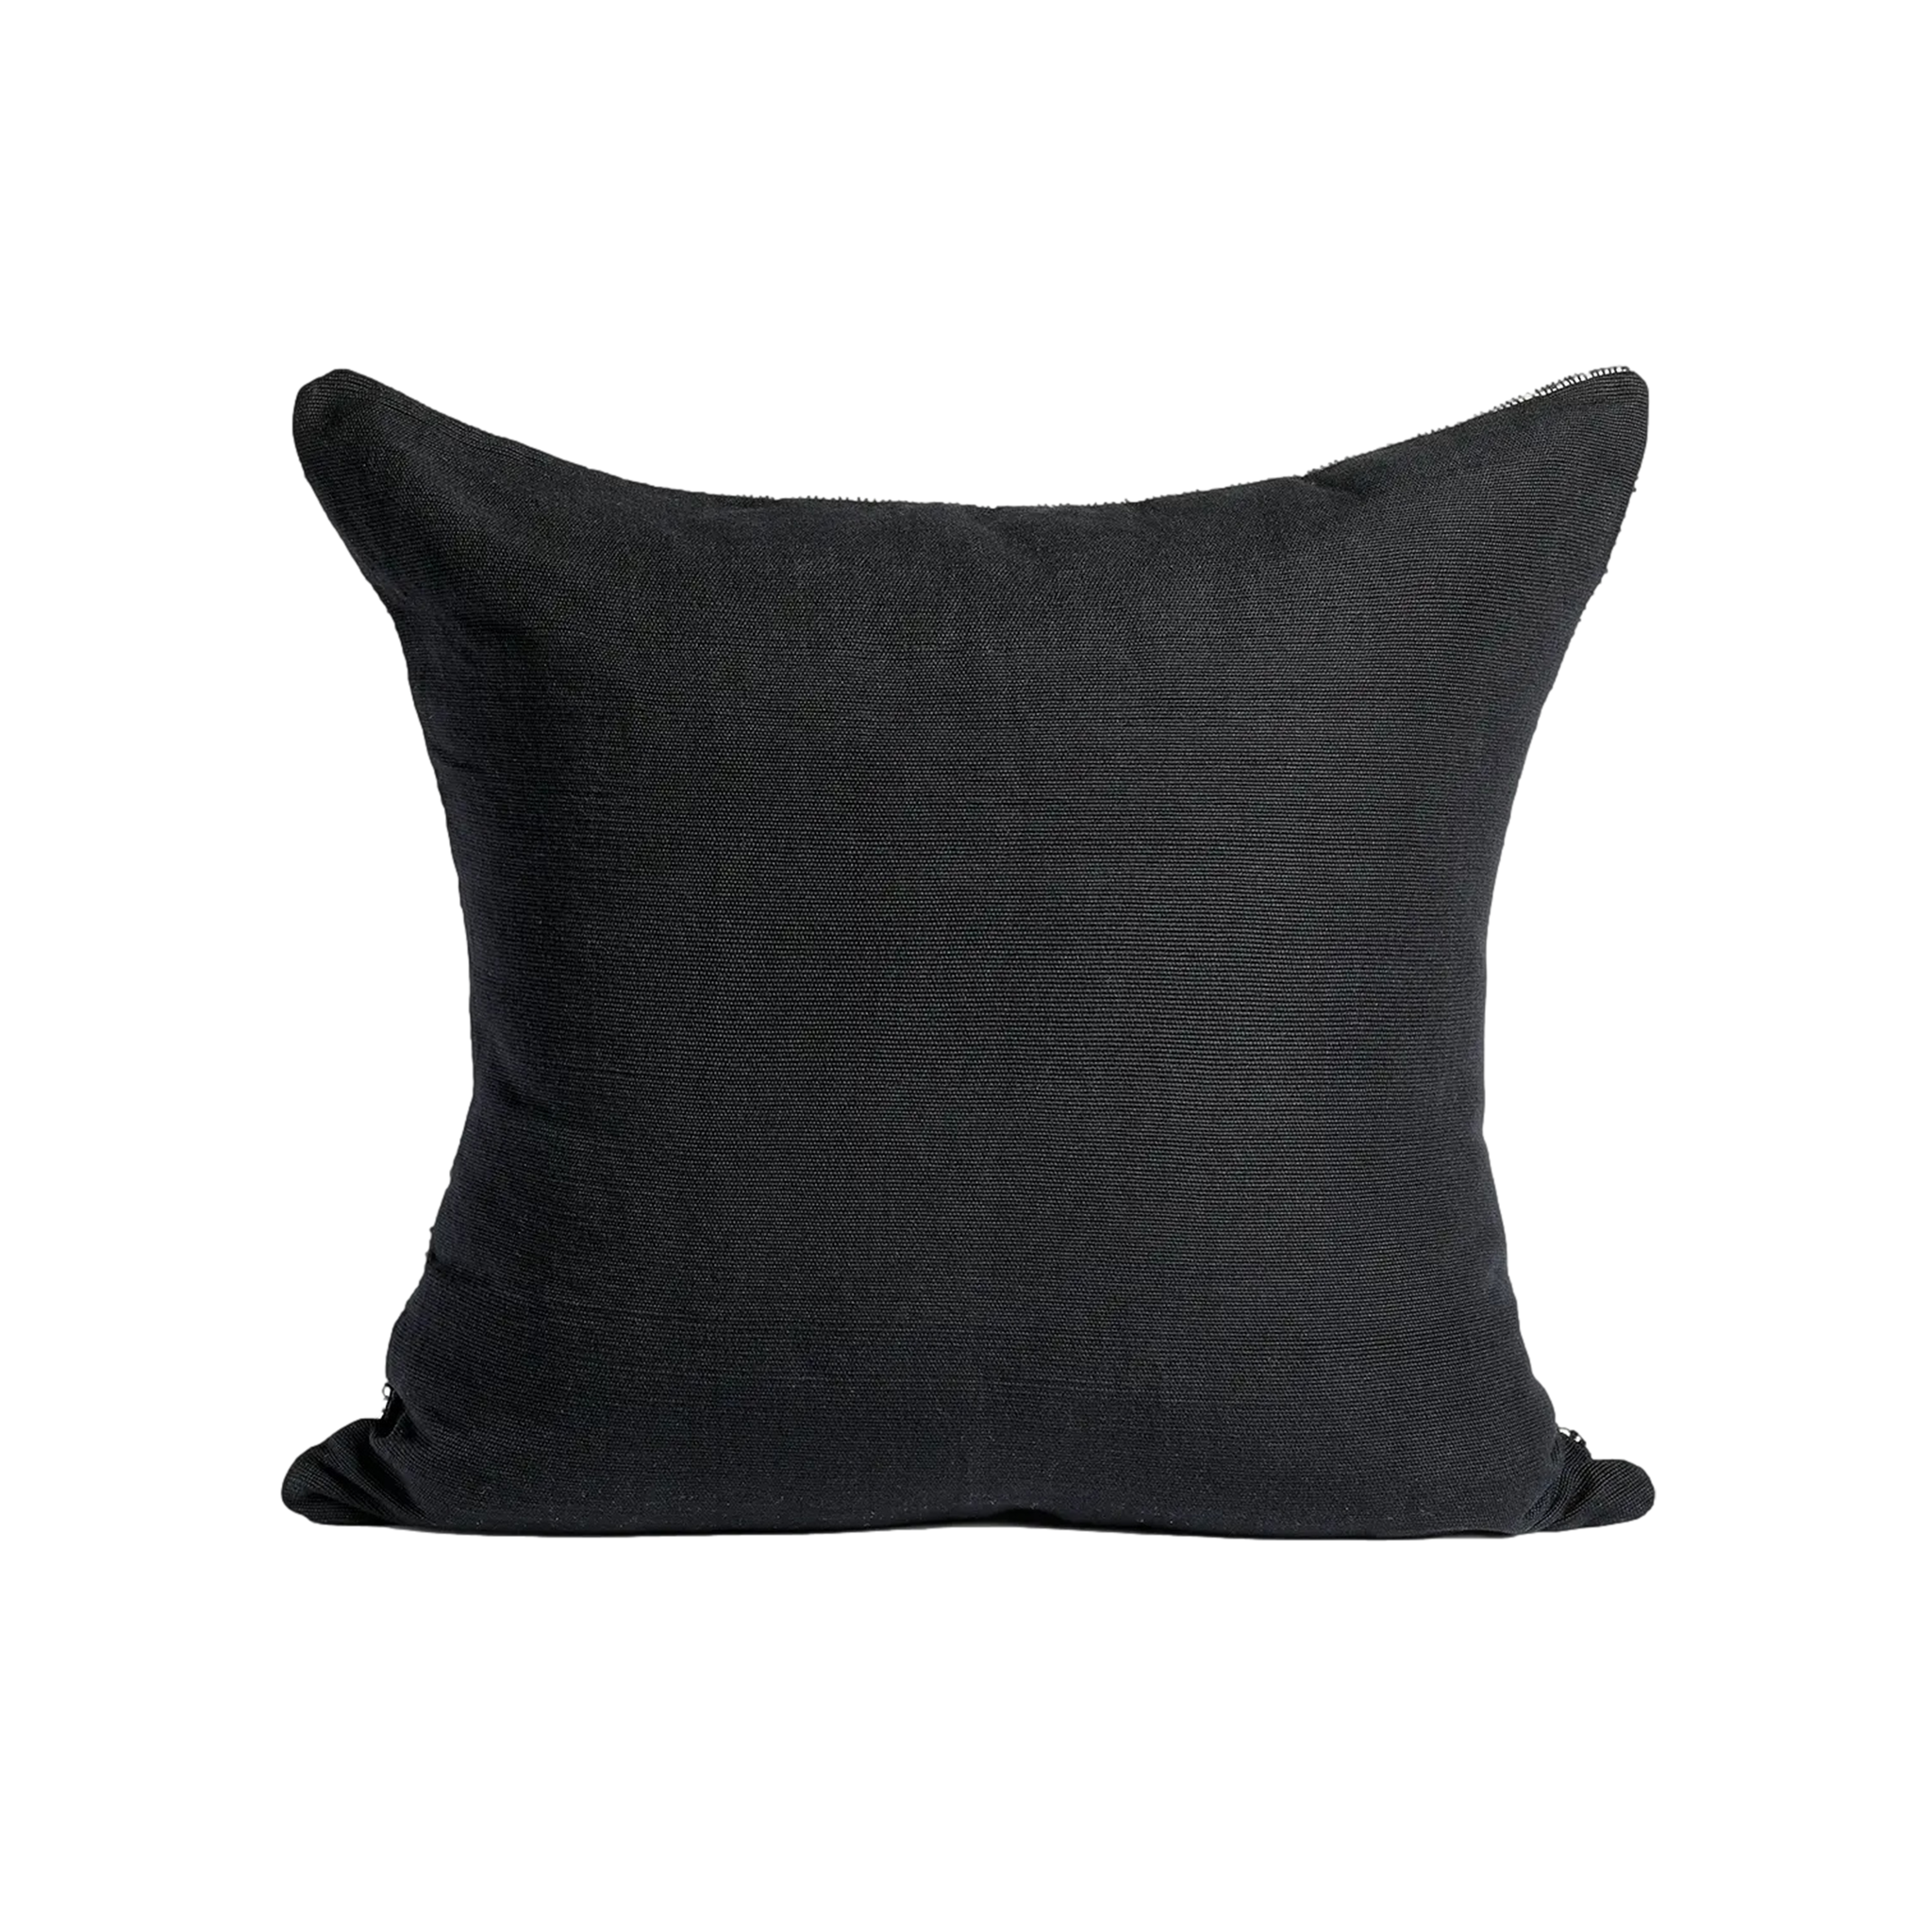 Medellin Throw Pillow in Black